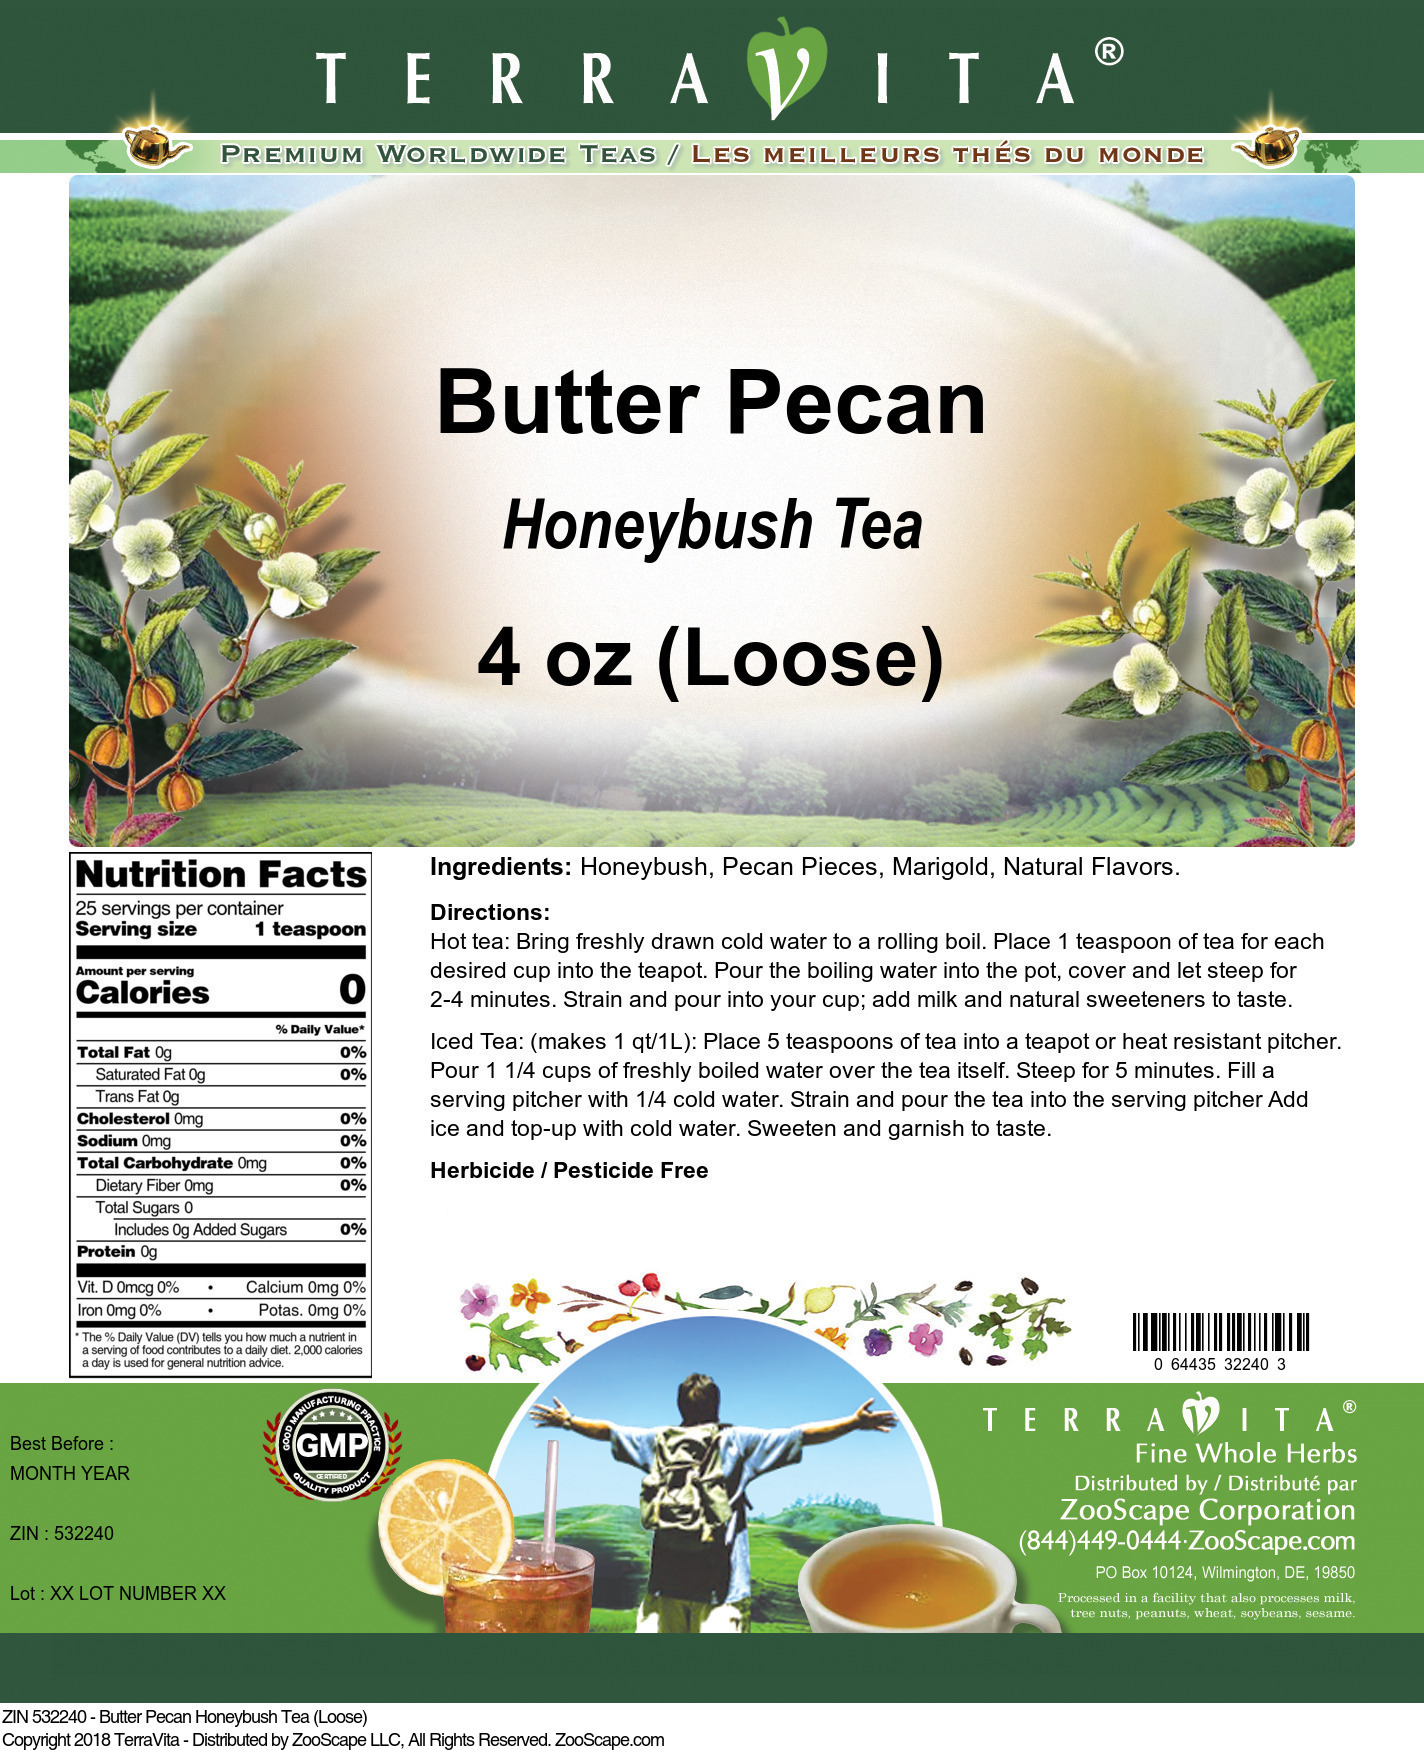 Butter Pecan Honeybush Tea (Loose) - Label